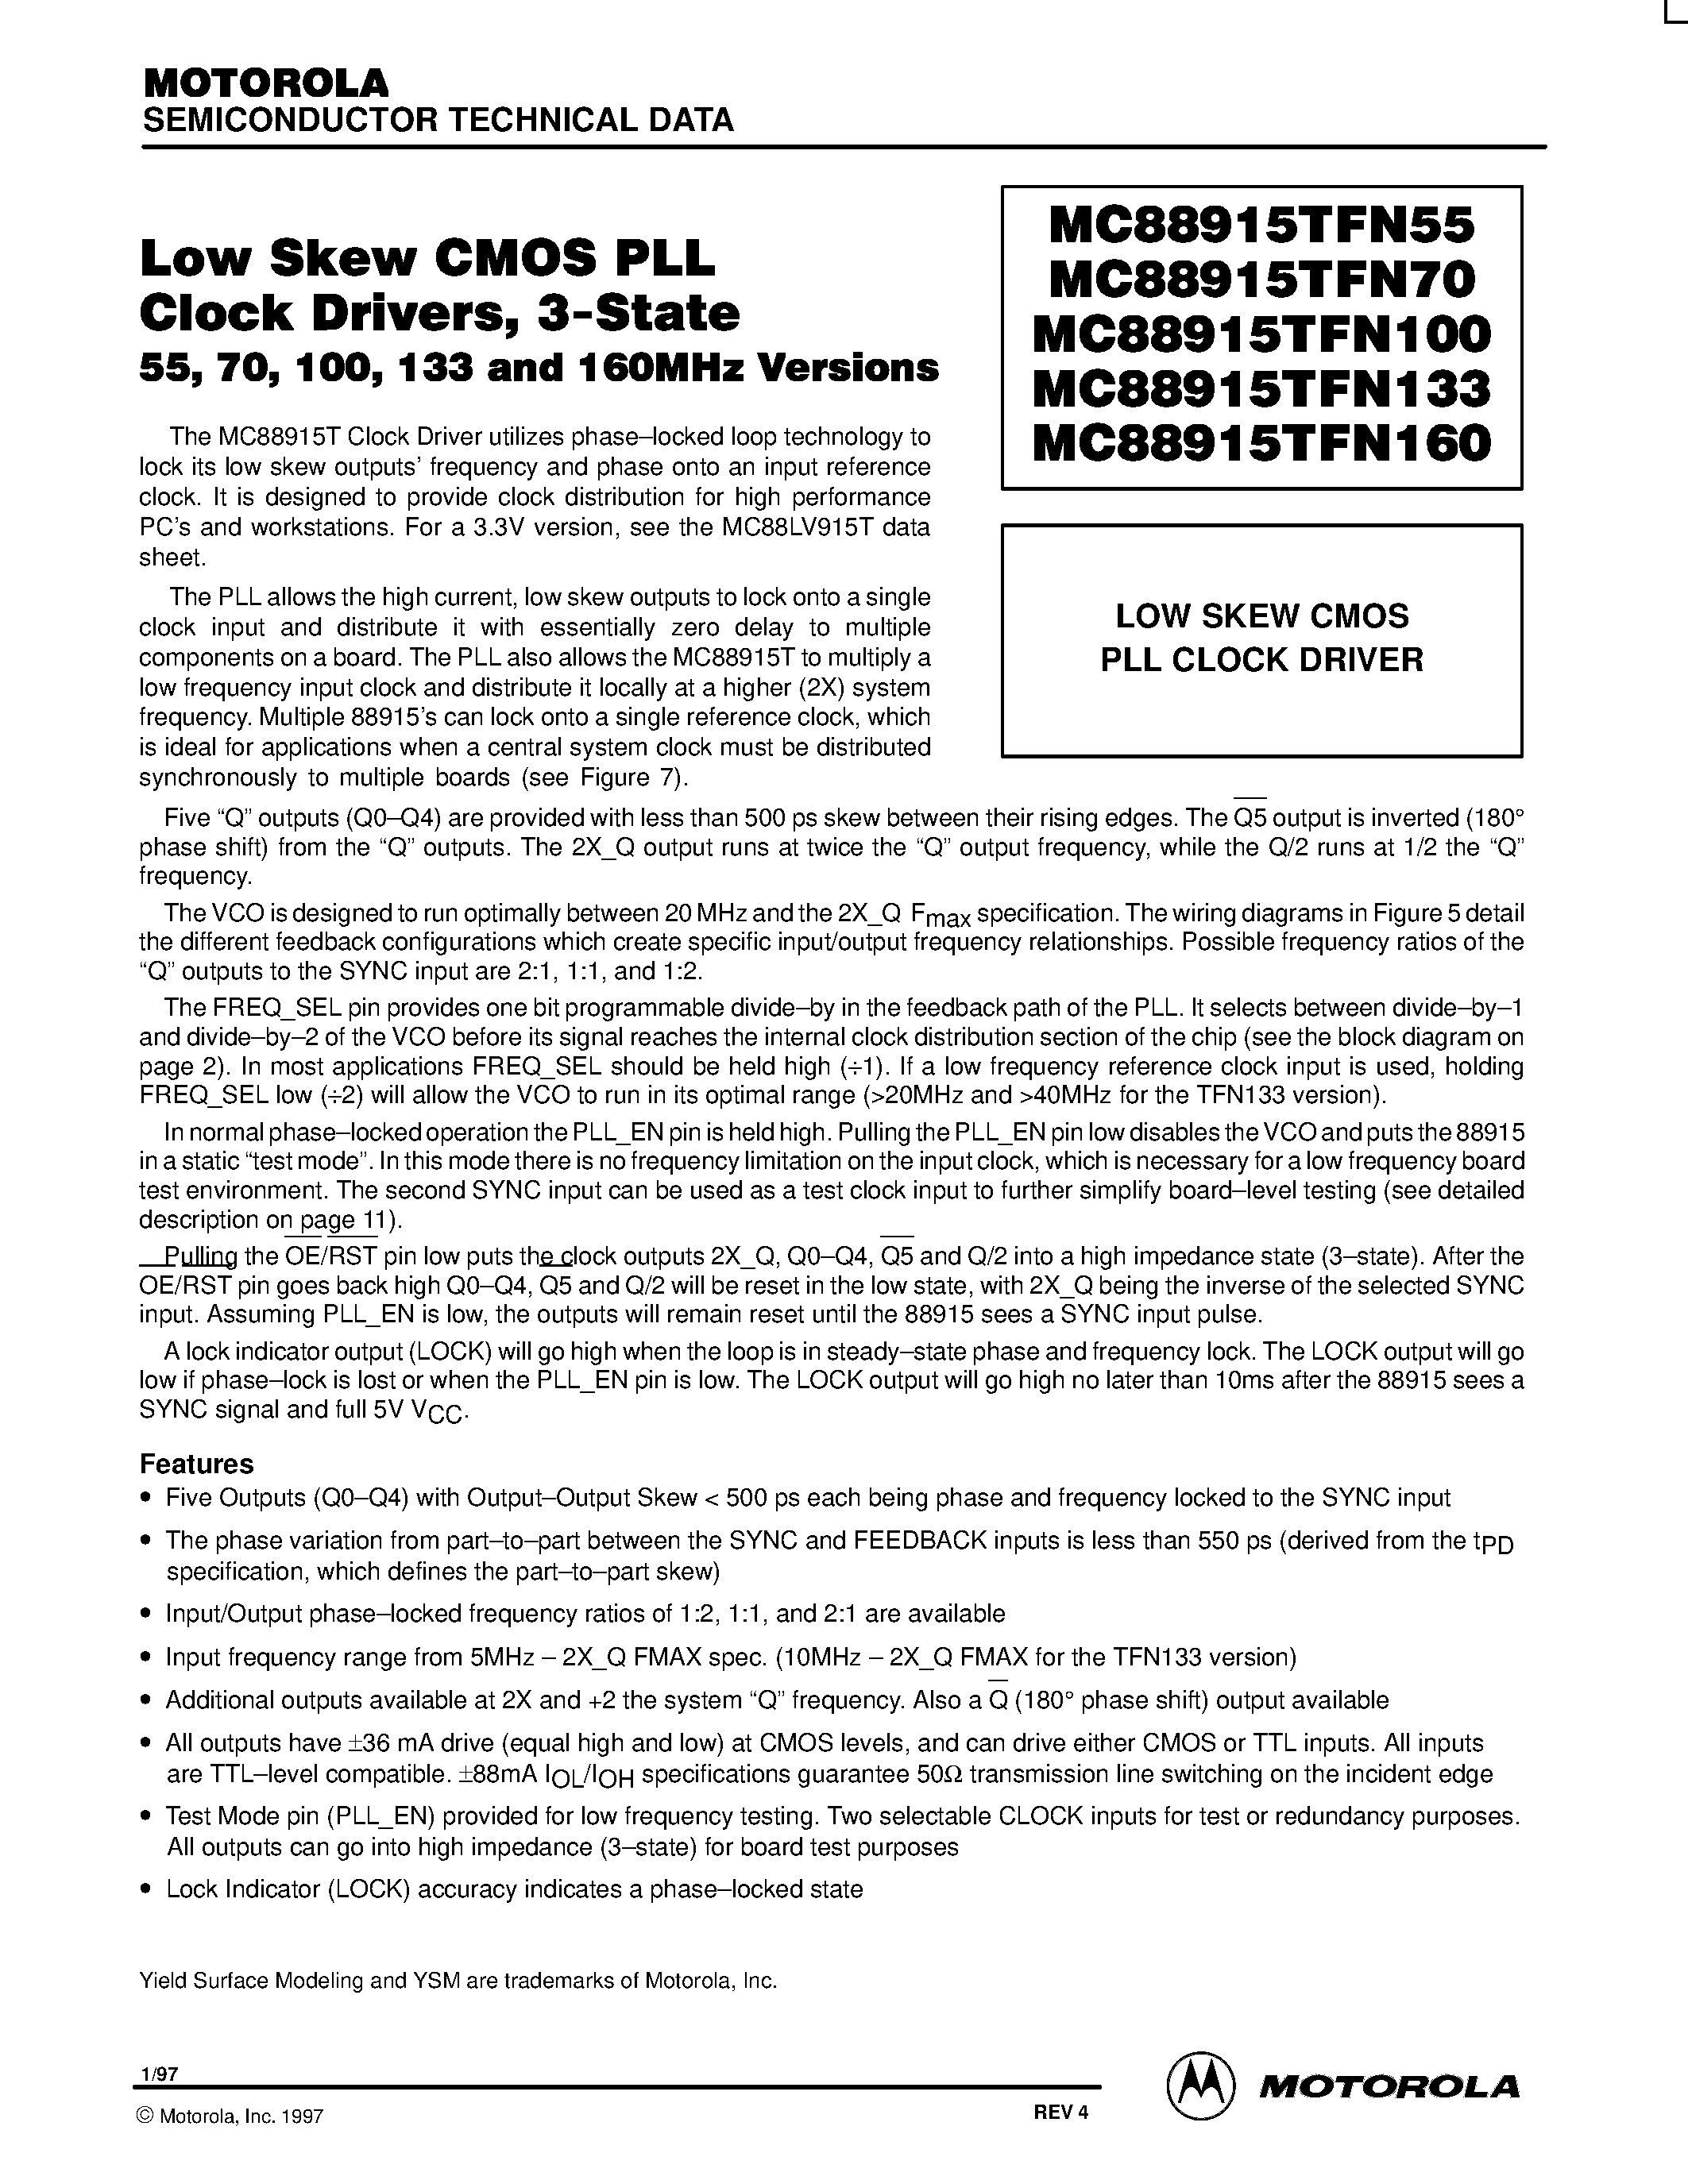 Datasheet MC88915TFN70 - LOW SKEW CMOS PLL CLOCK DRIVER page 1